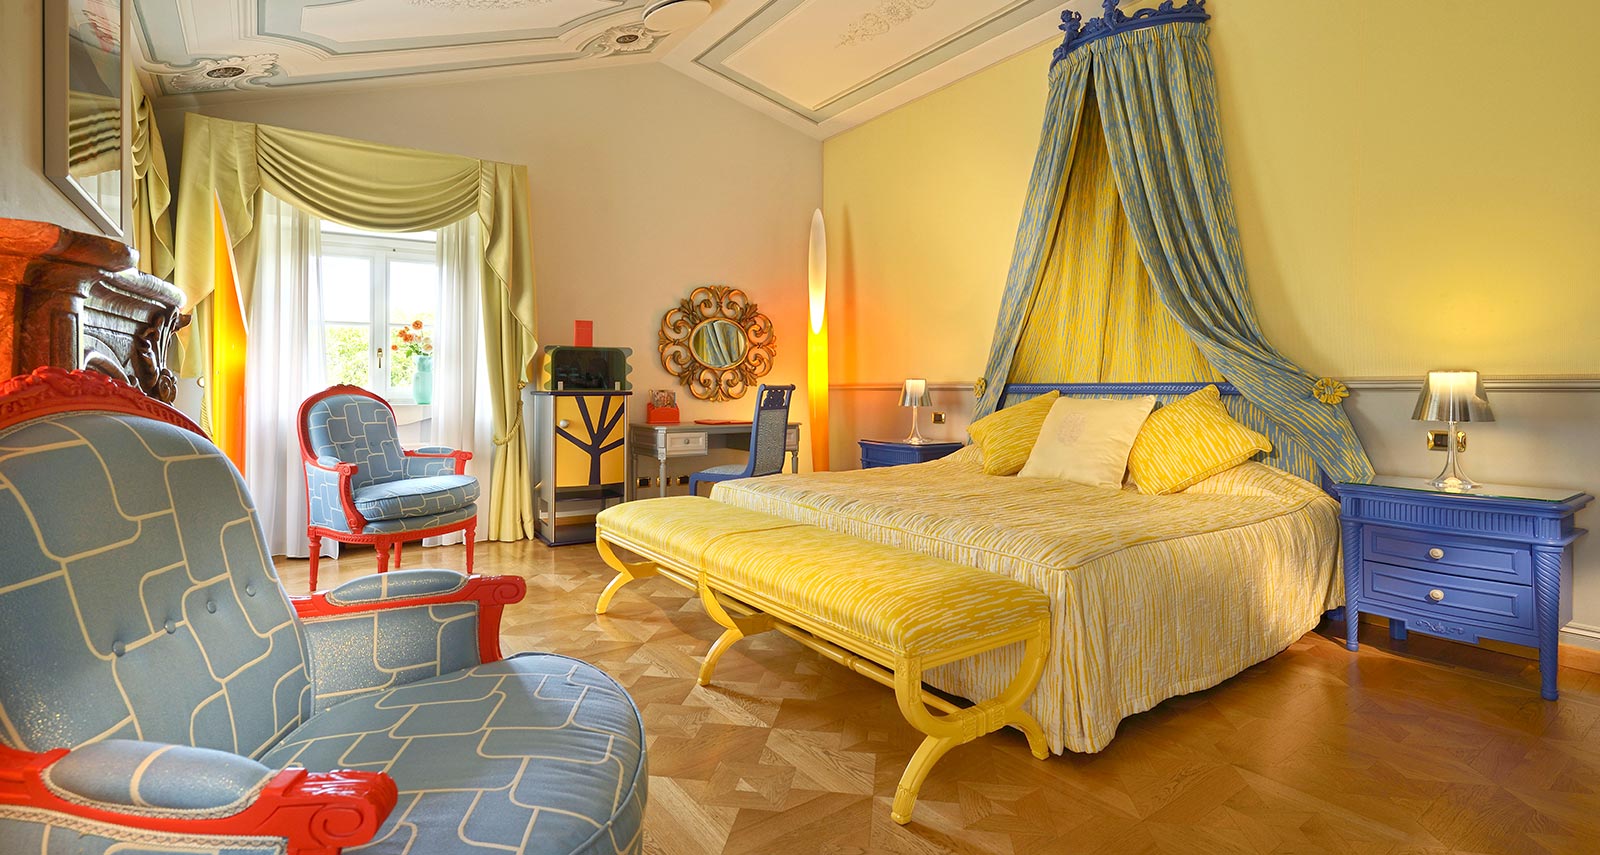 Luxury accommodation Byblos Hotel Verona